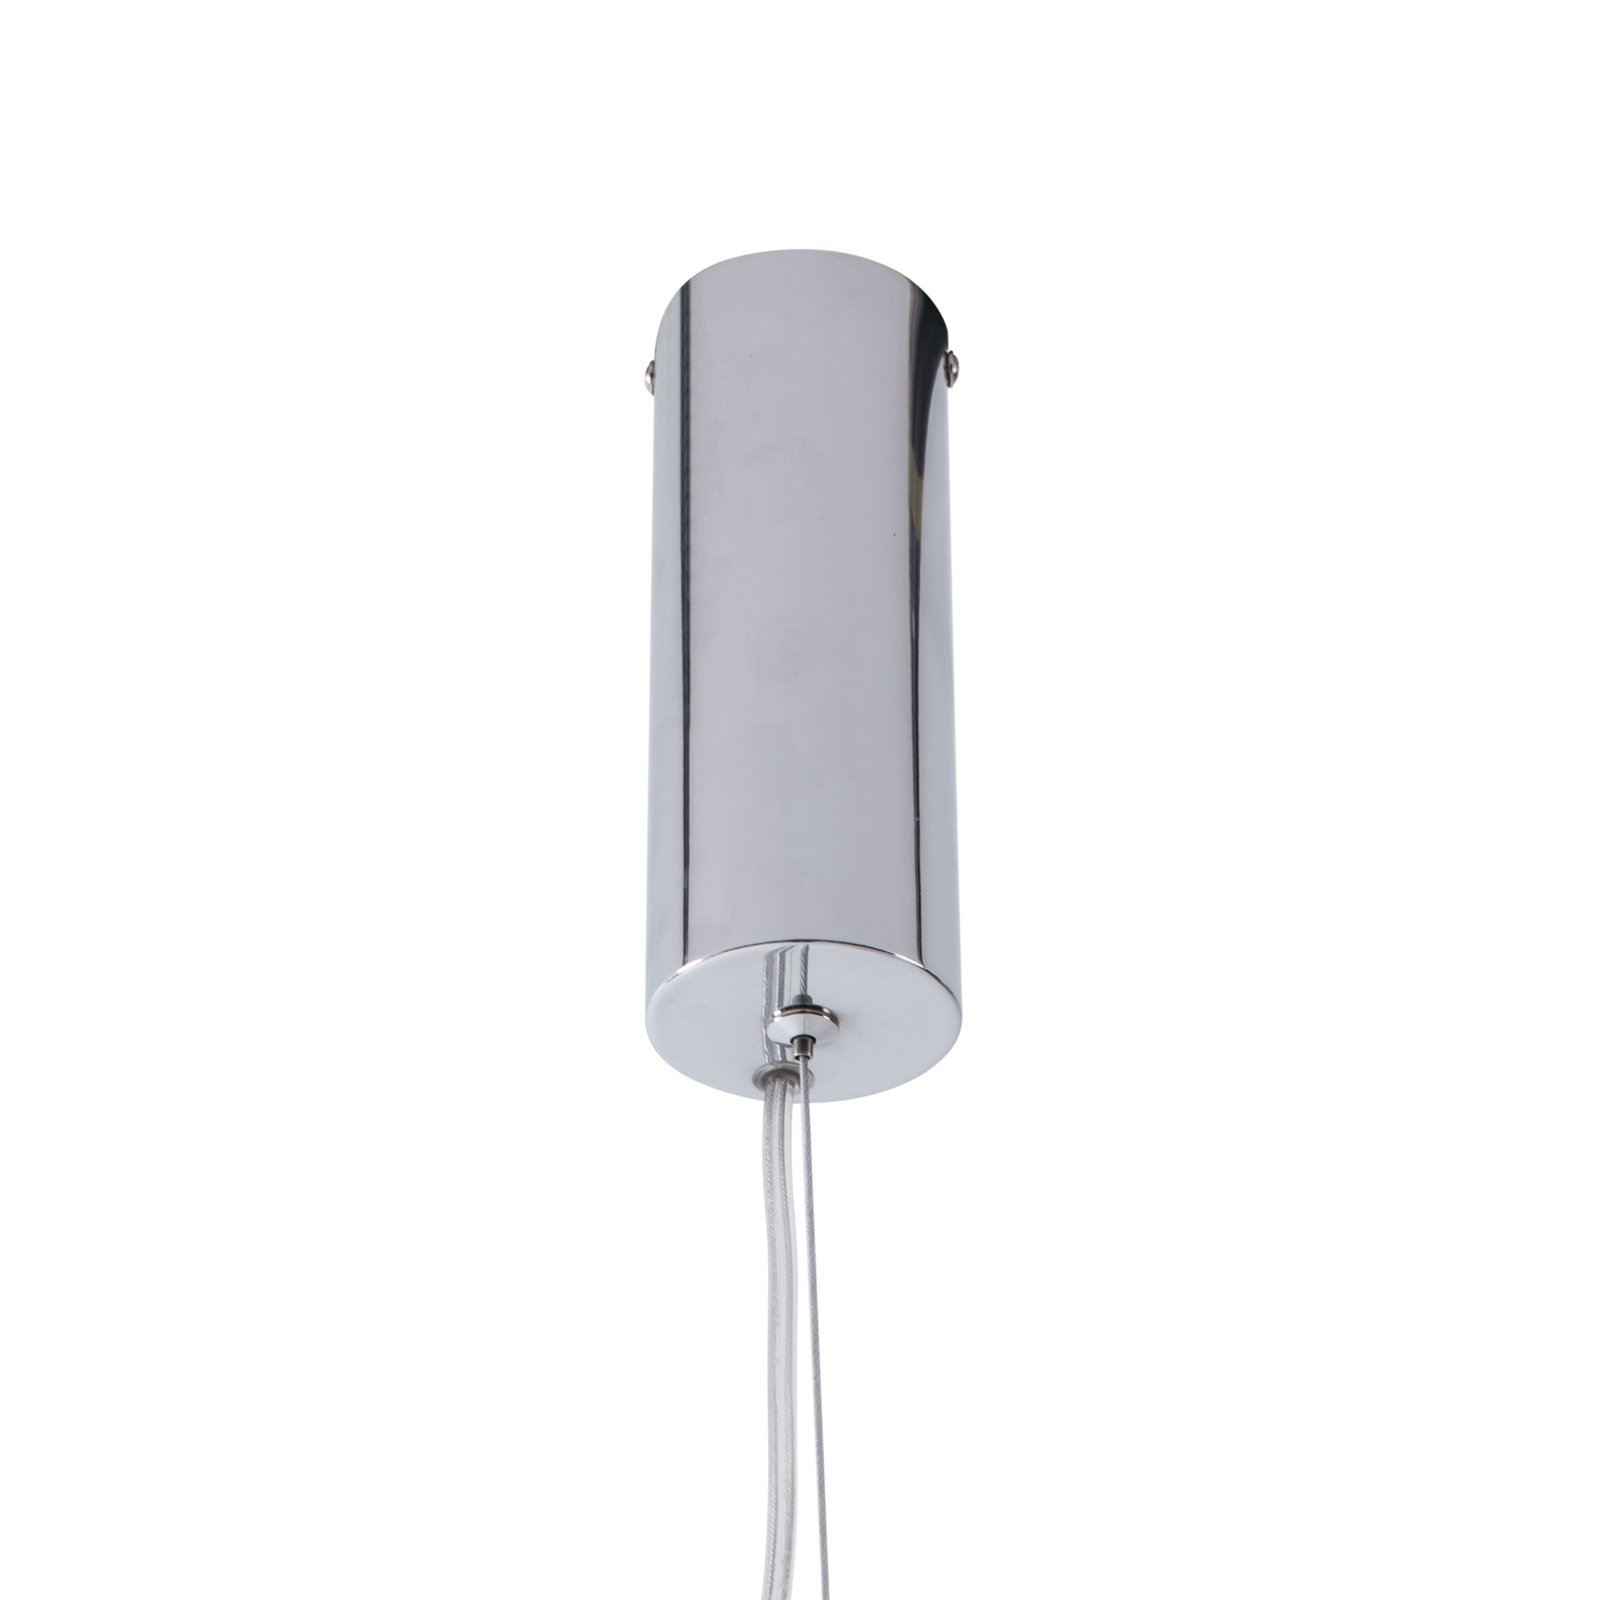 Lucande Fedra LED hanglamp met glazen kappen